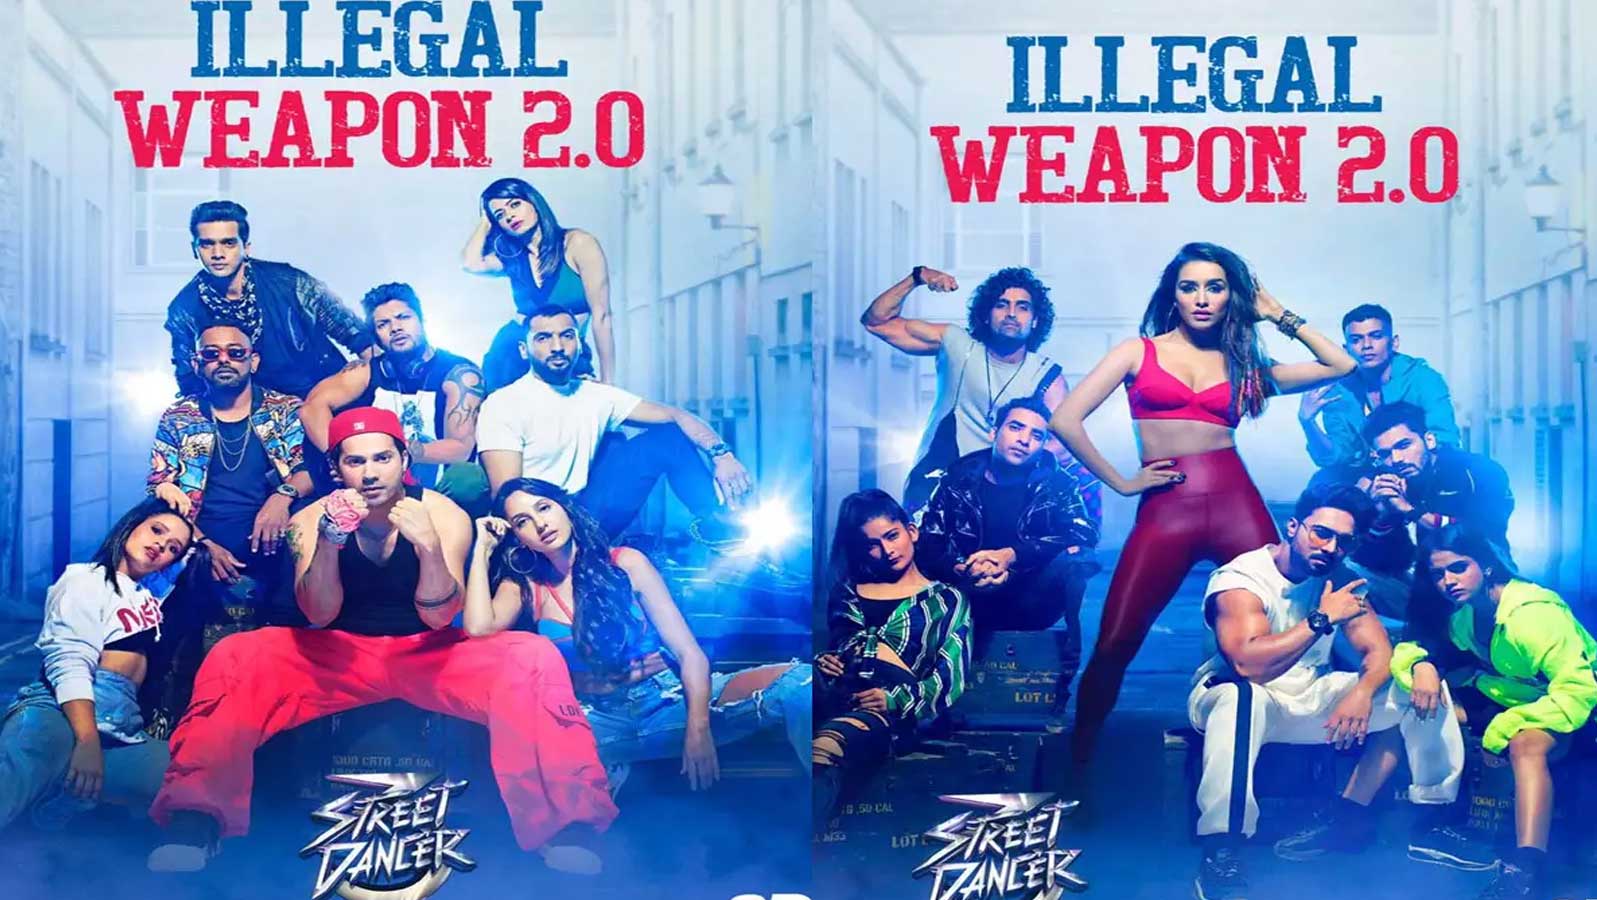 Street Dancer 3d Varun Dhawan Shares Poster Of Illegal Weapon